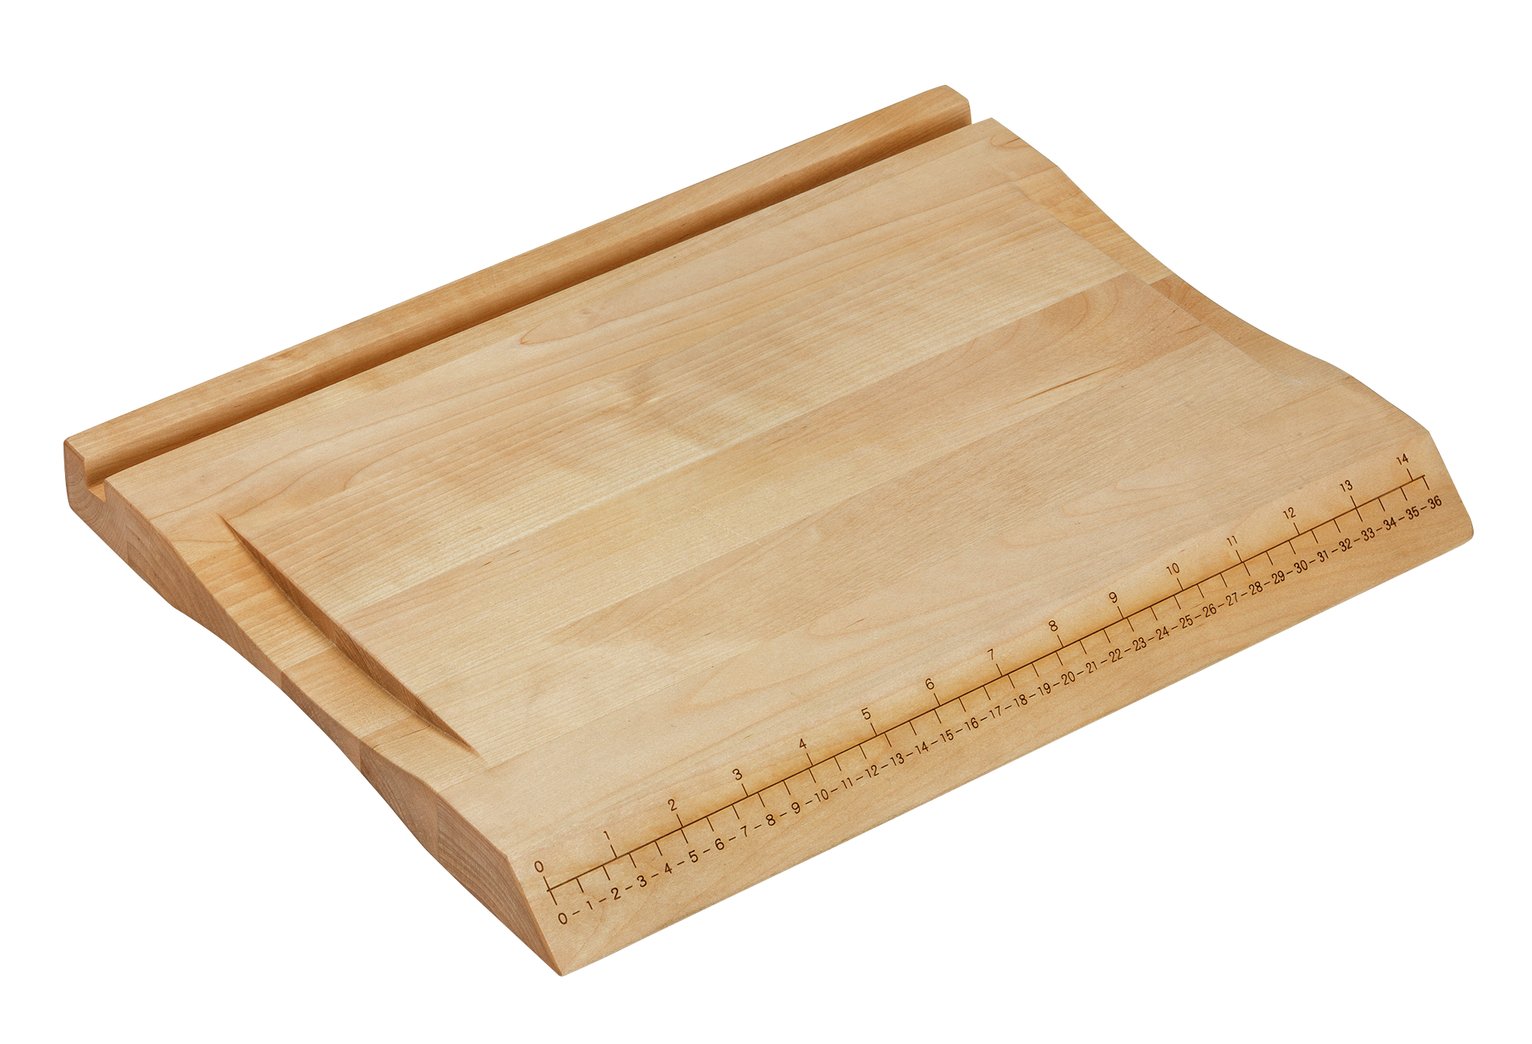 Good Housekeeping Wooden Chopping Board